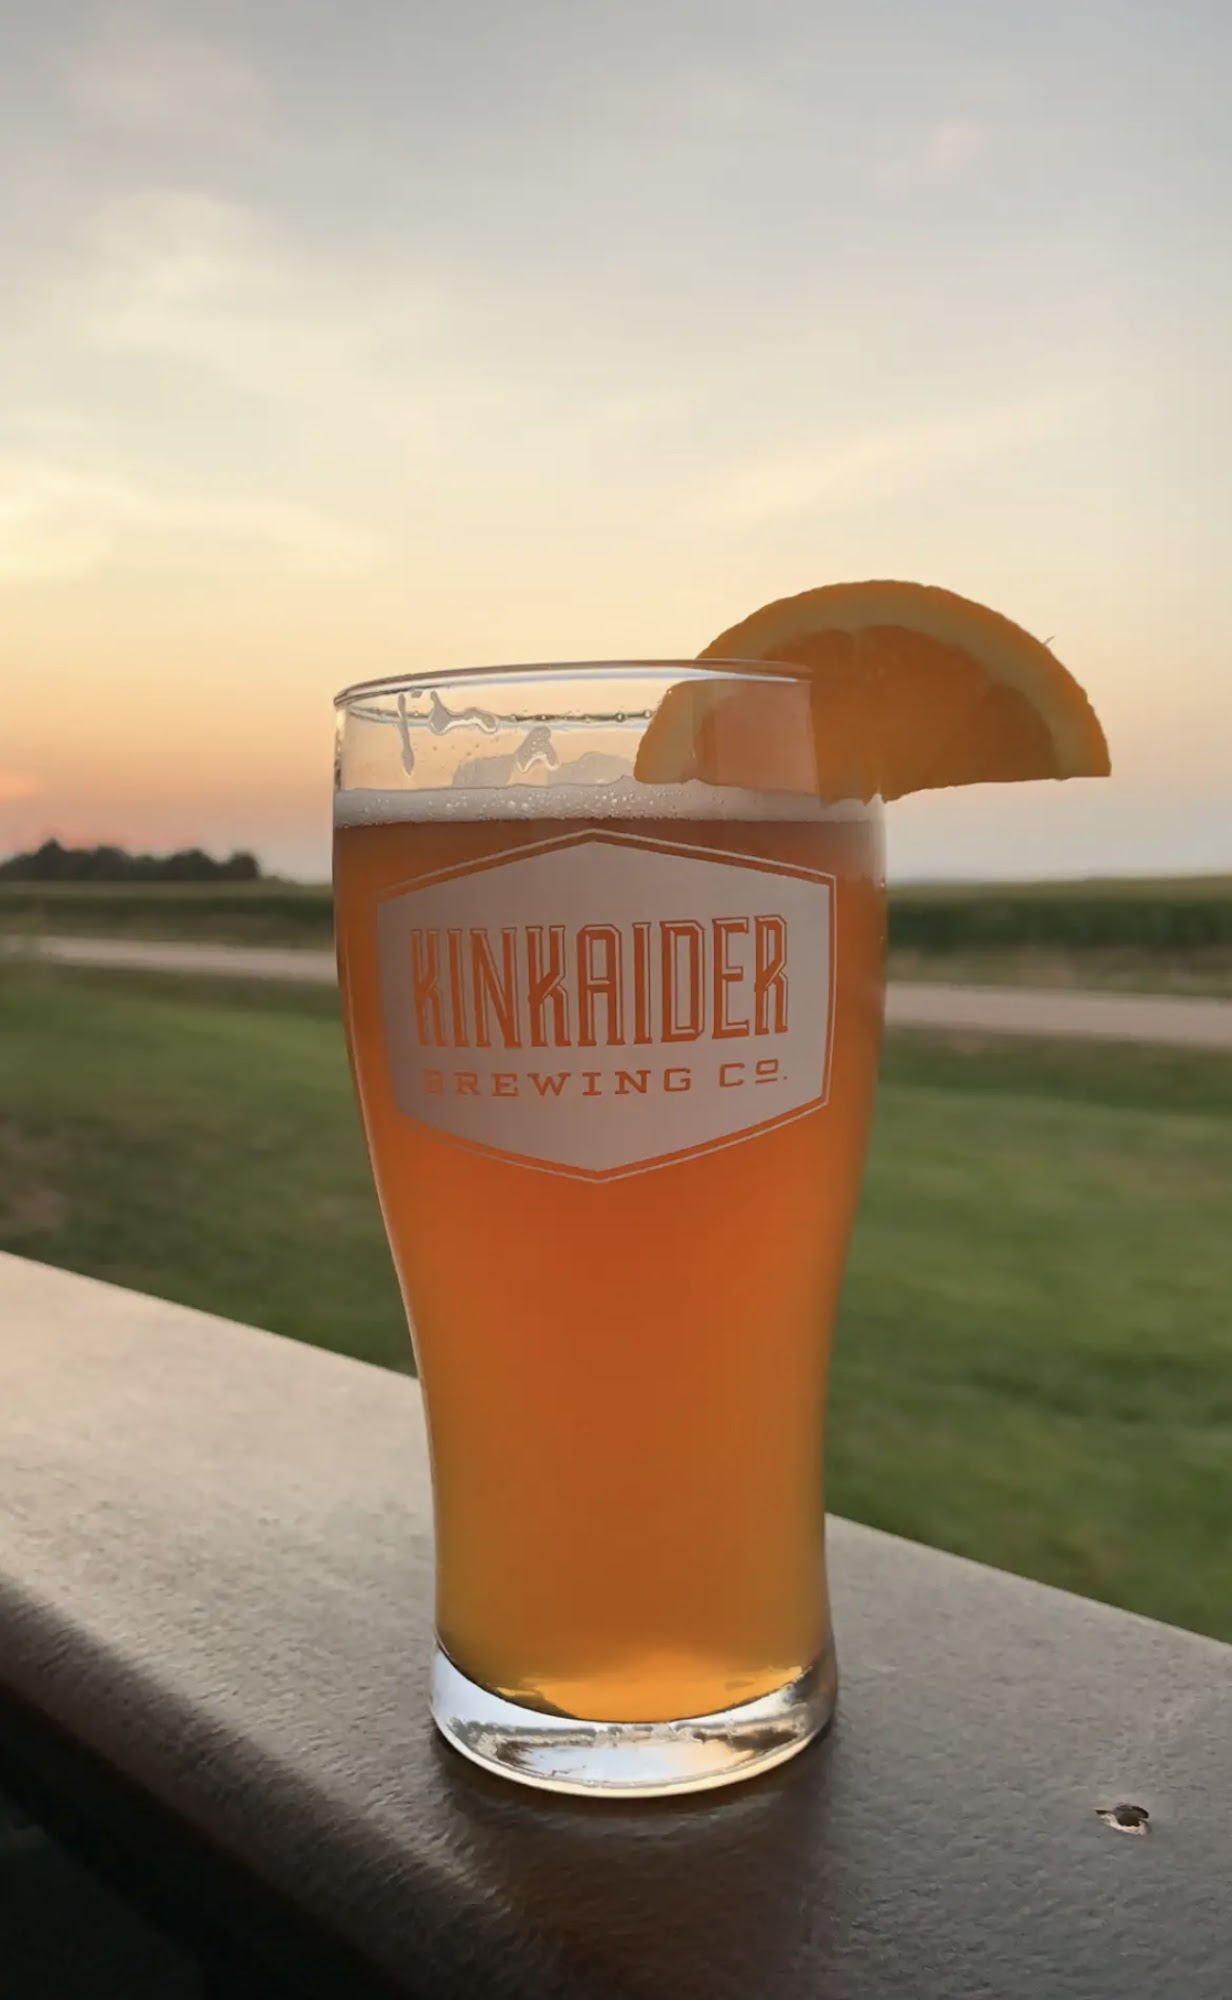 Kinkaider Brewing Co. Lincoln